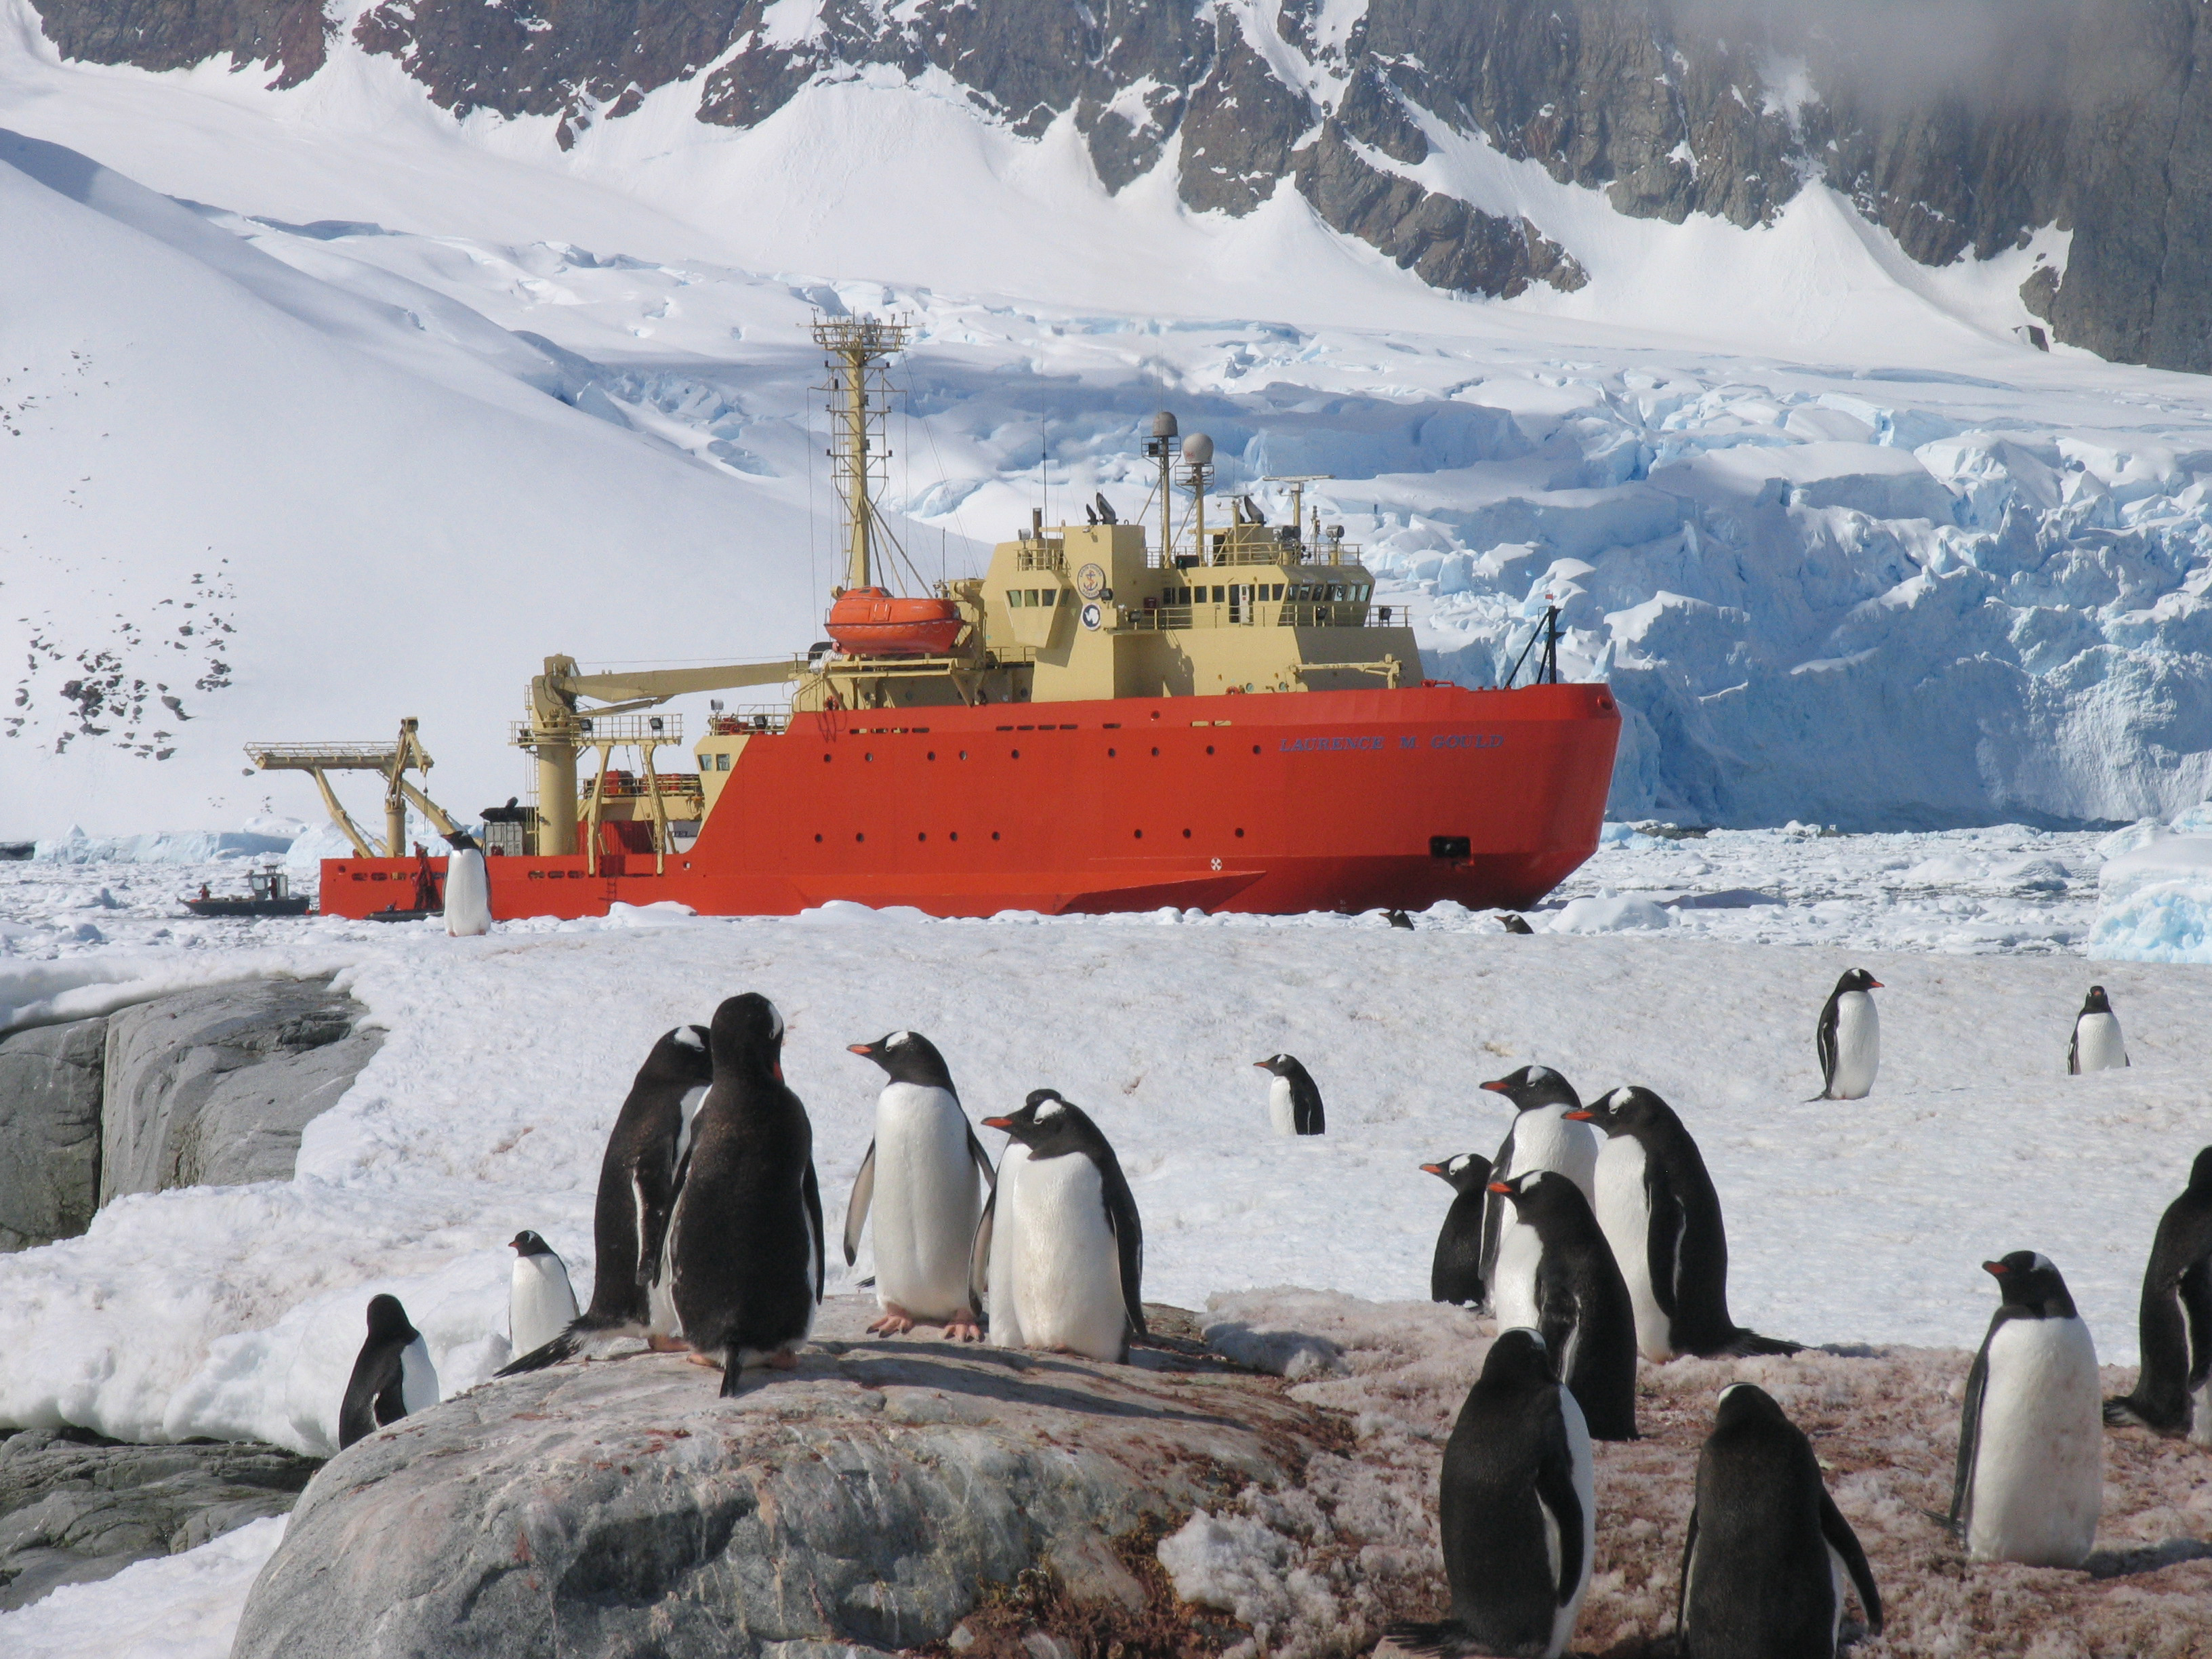 A ship passes a colony of penguins.